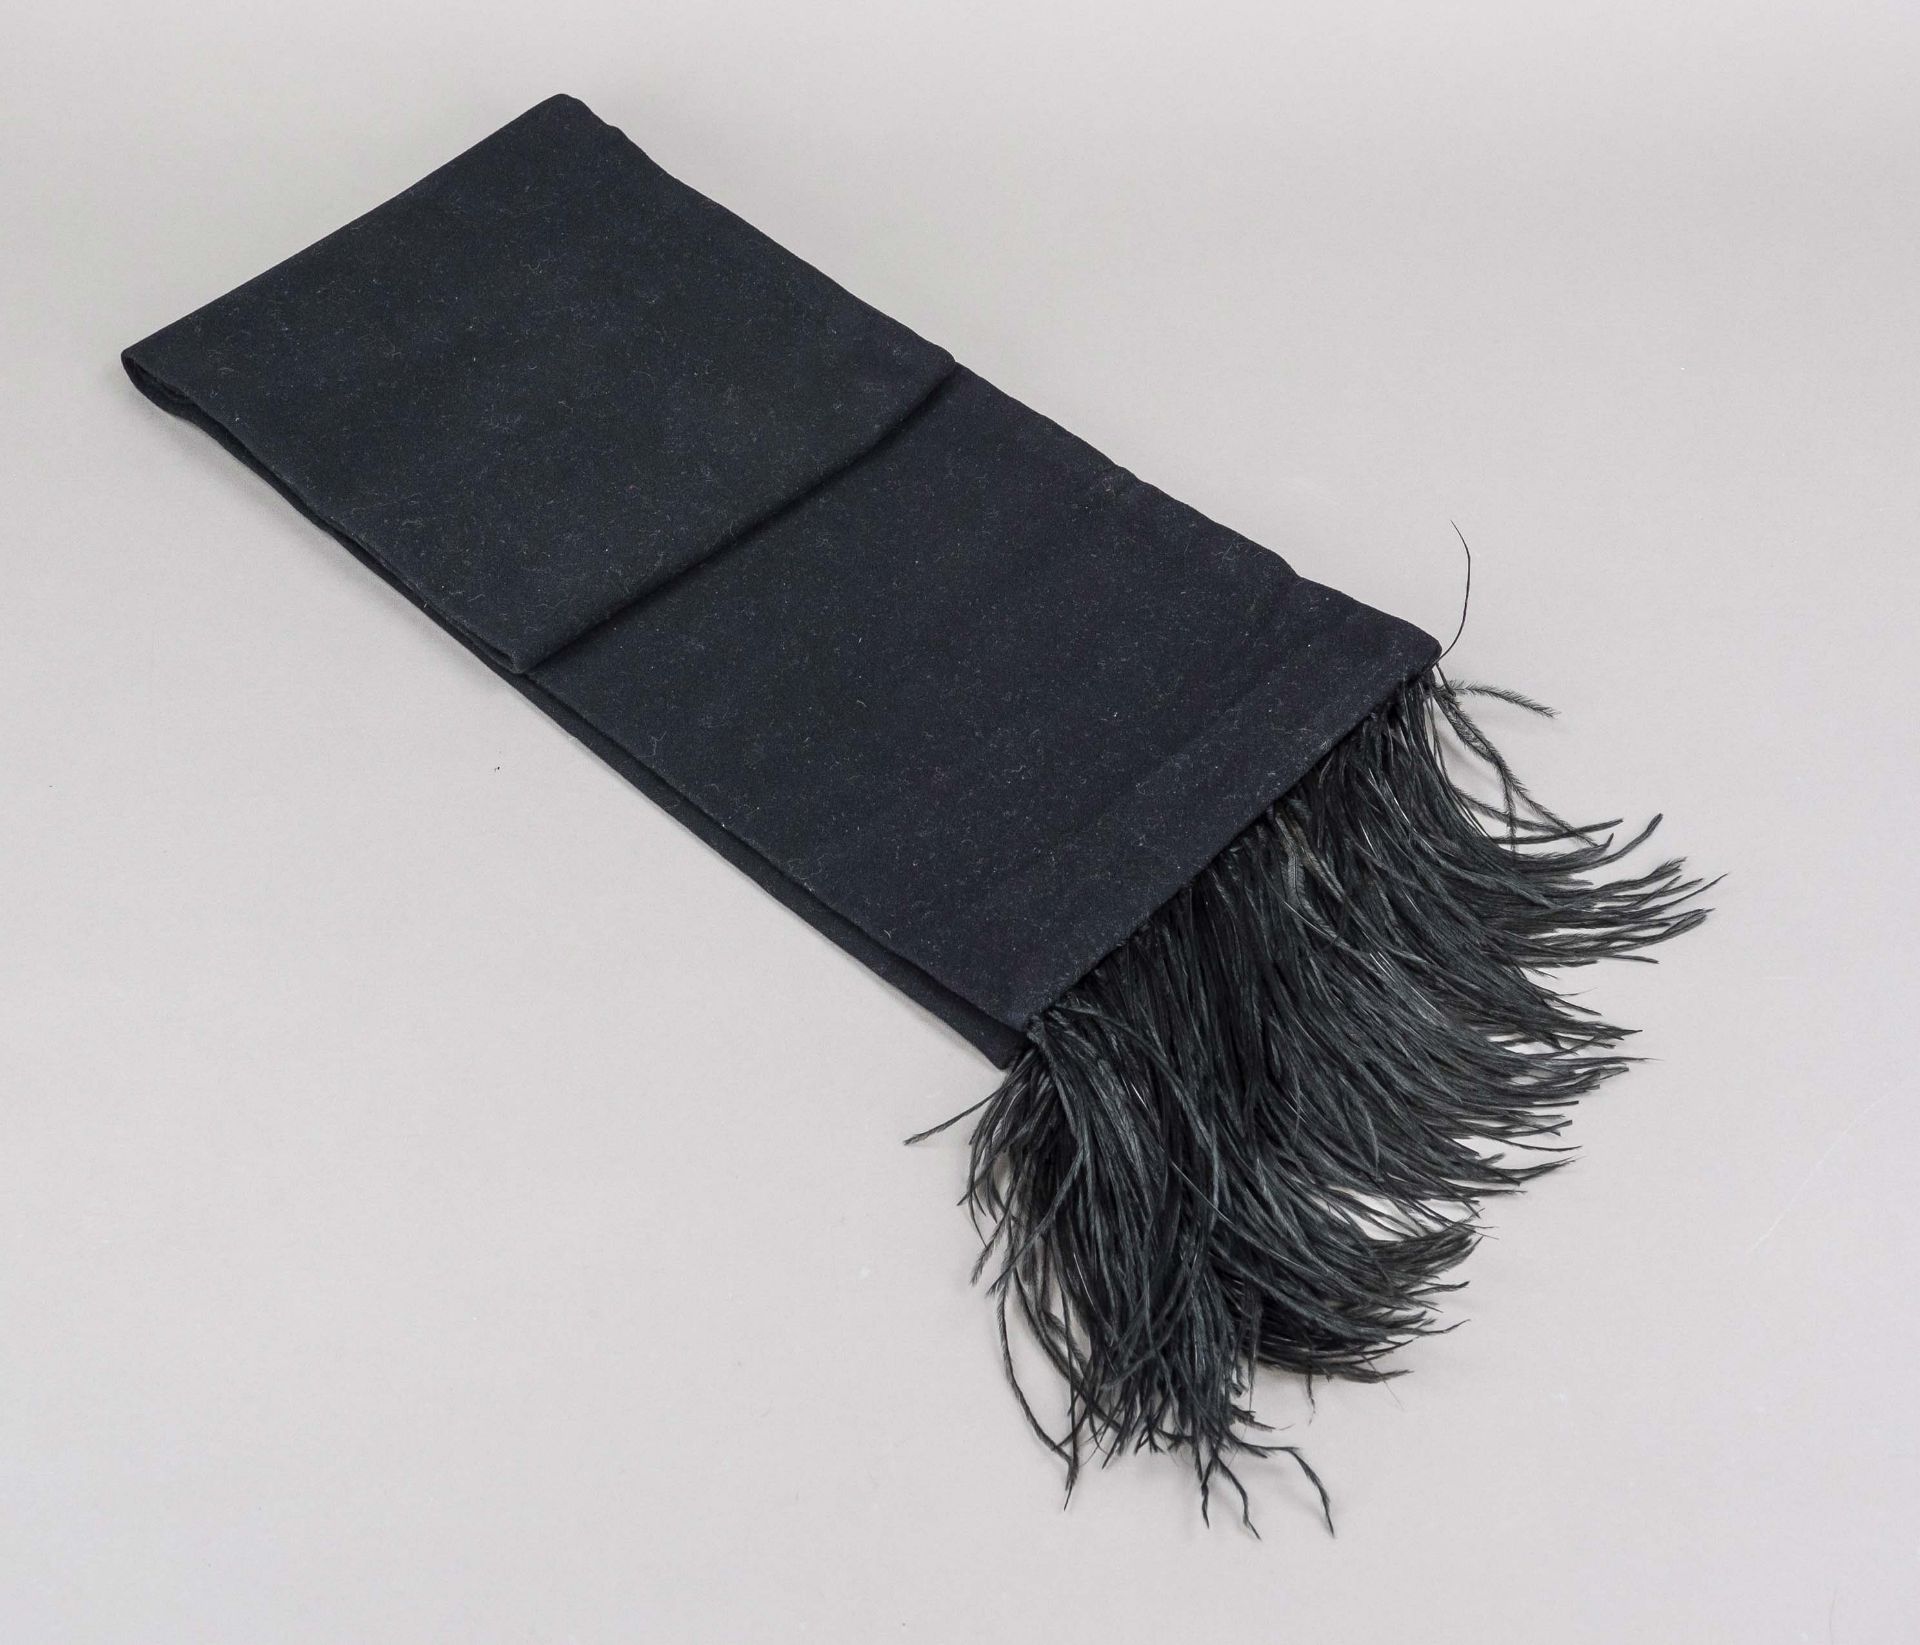 Jil Sander, wide scarf, soft black textile blend with feathered hem (marabou feathers?), slight